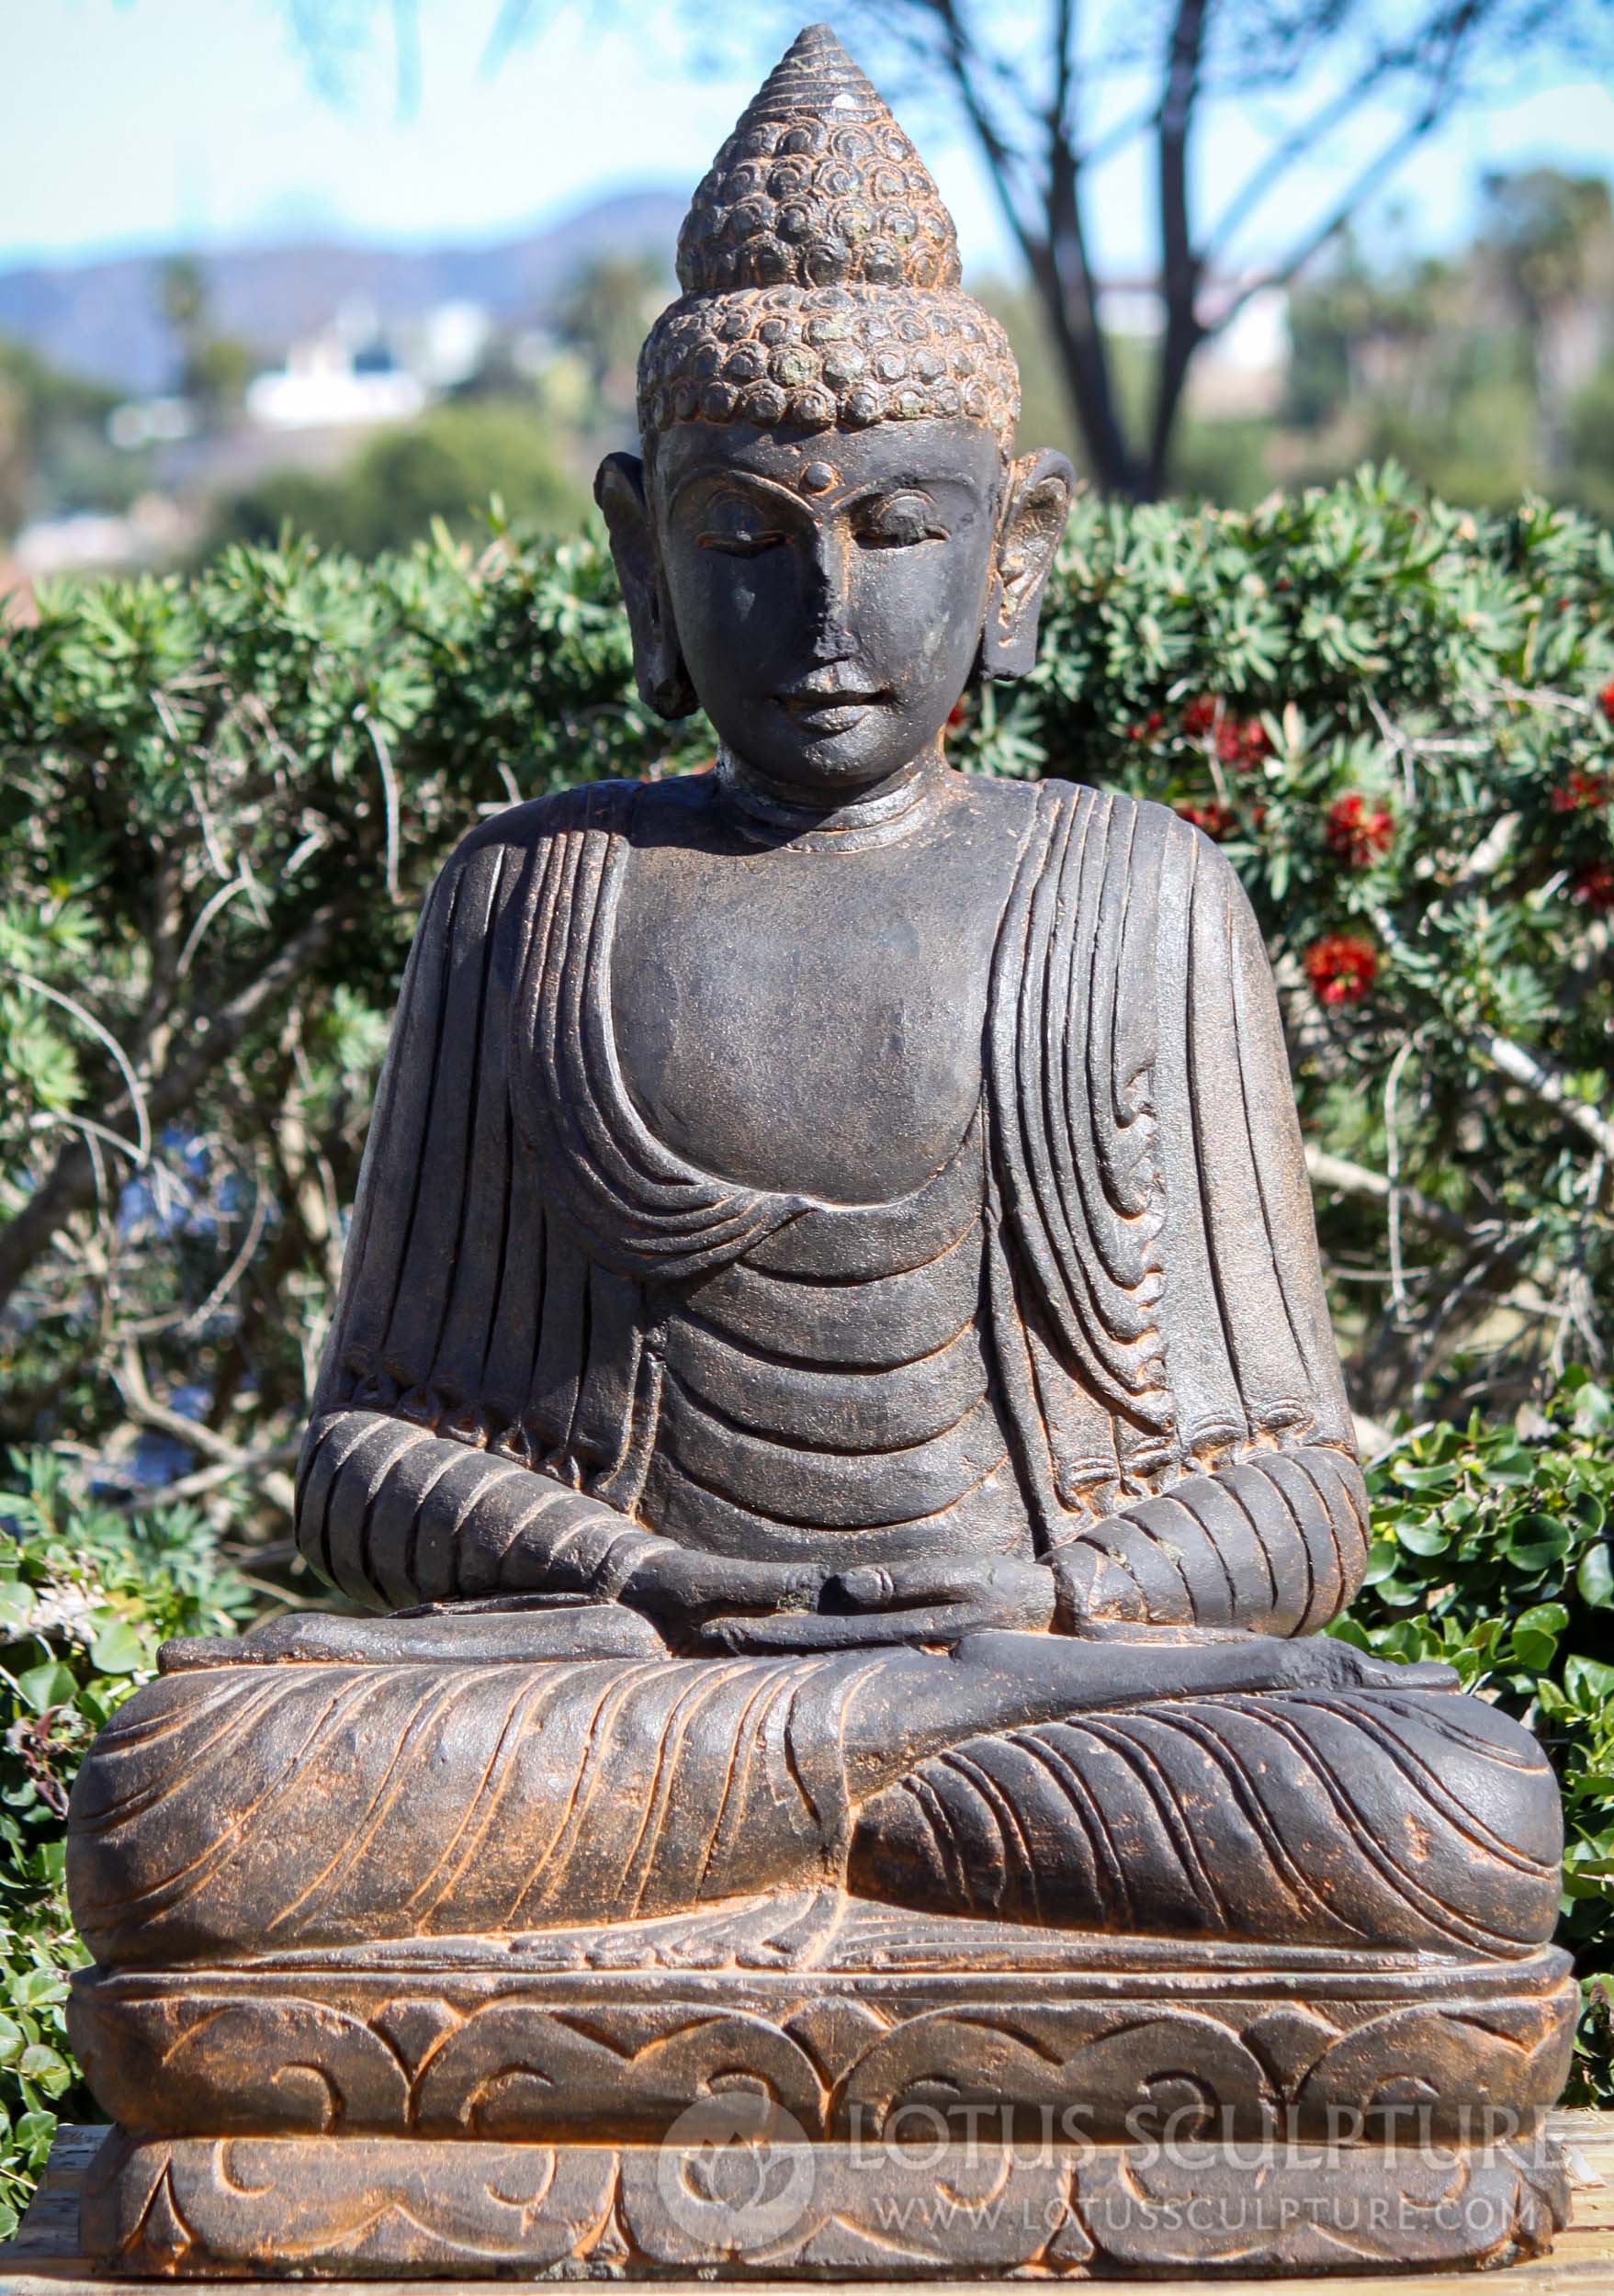 SOLD Stone Meditating Buddha Statue in Robes Zen Garden Sculpture All ...